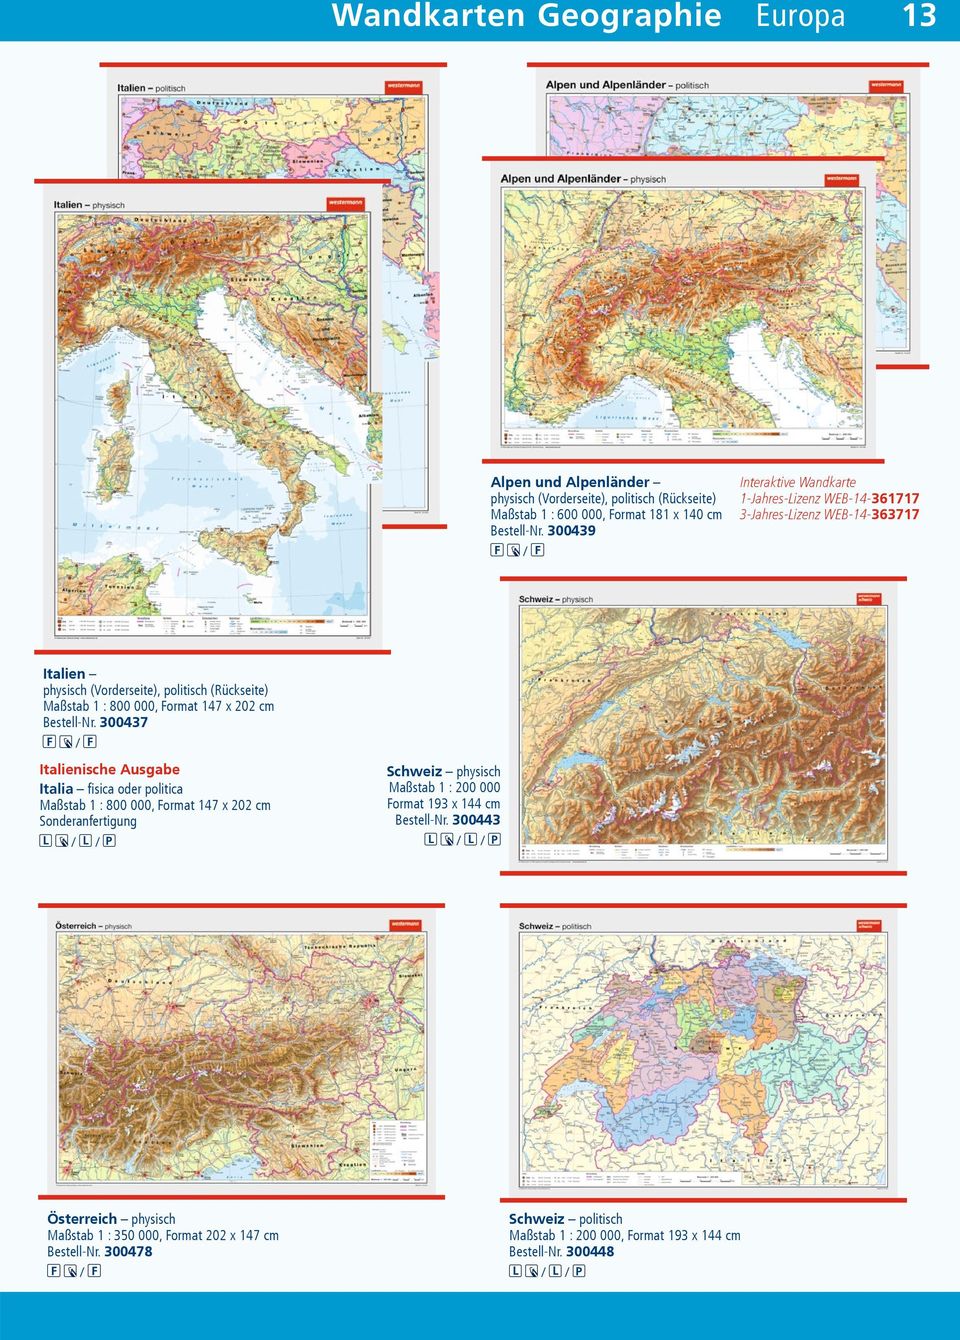 300437 Italienische Ausgabe Italia fisica oder politica Maßstab 1 : 800 000, Format 147 x 202 cm Sonderanfertigung P Schweiz physisch Maßstab 1 :